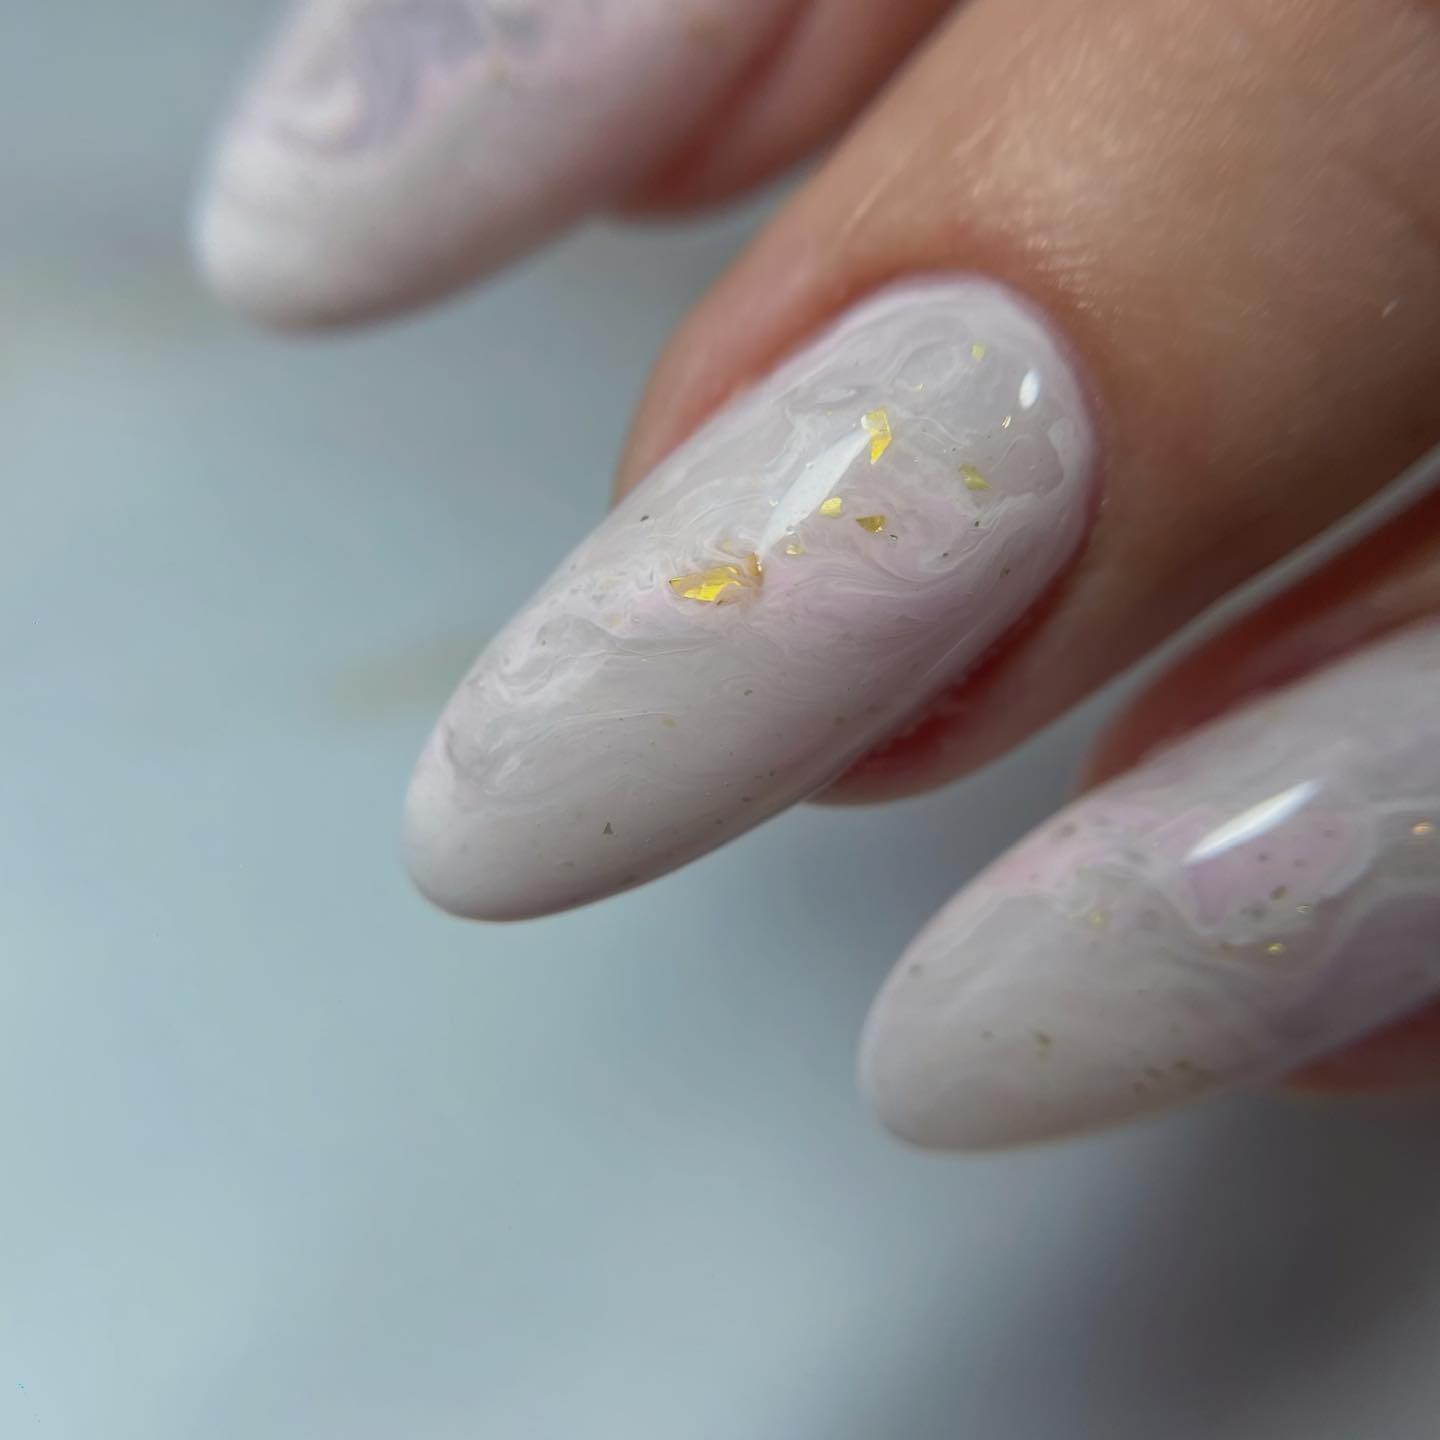 Marmor Nails 🌸
……………………
#longnails #marmoreffekt #marmornails #cupiogel #cupiogermany #brianabeautykassel